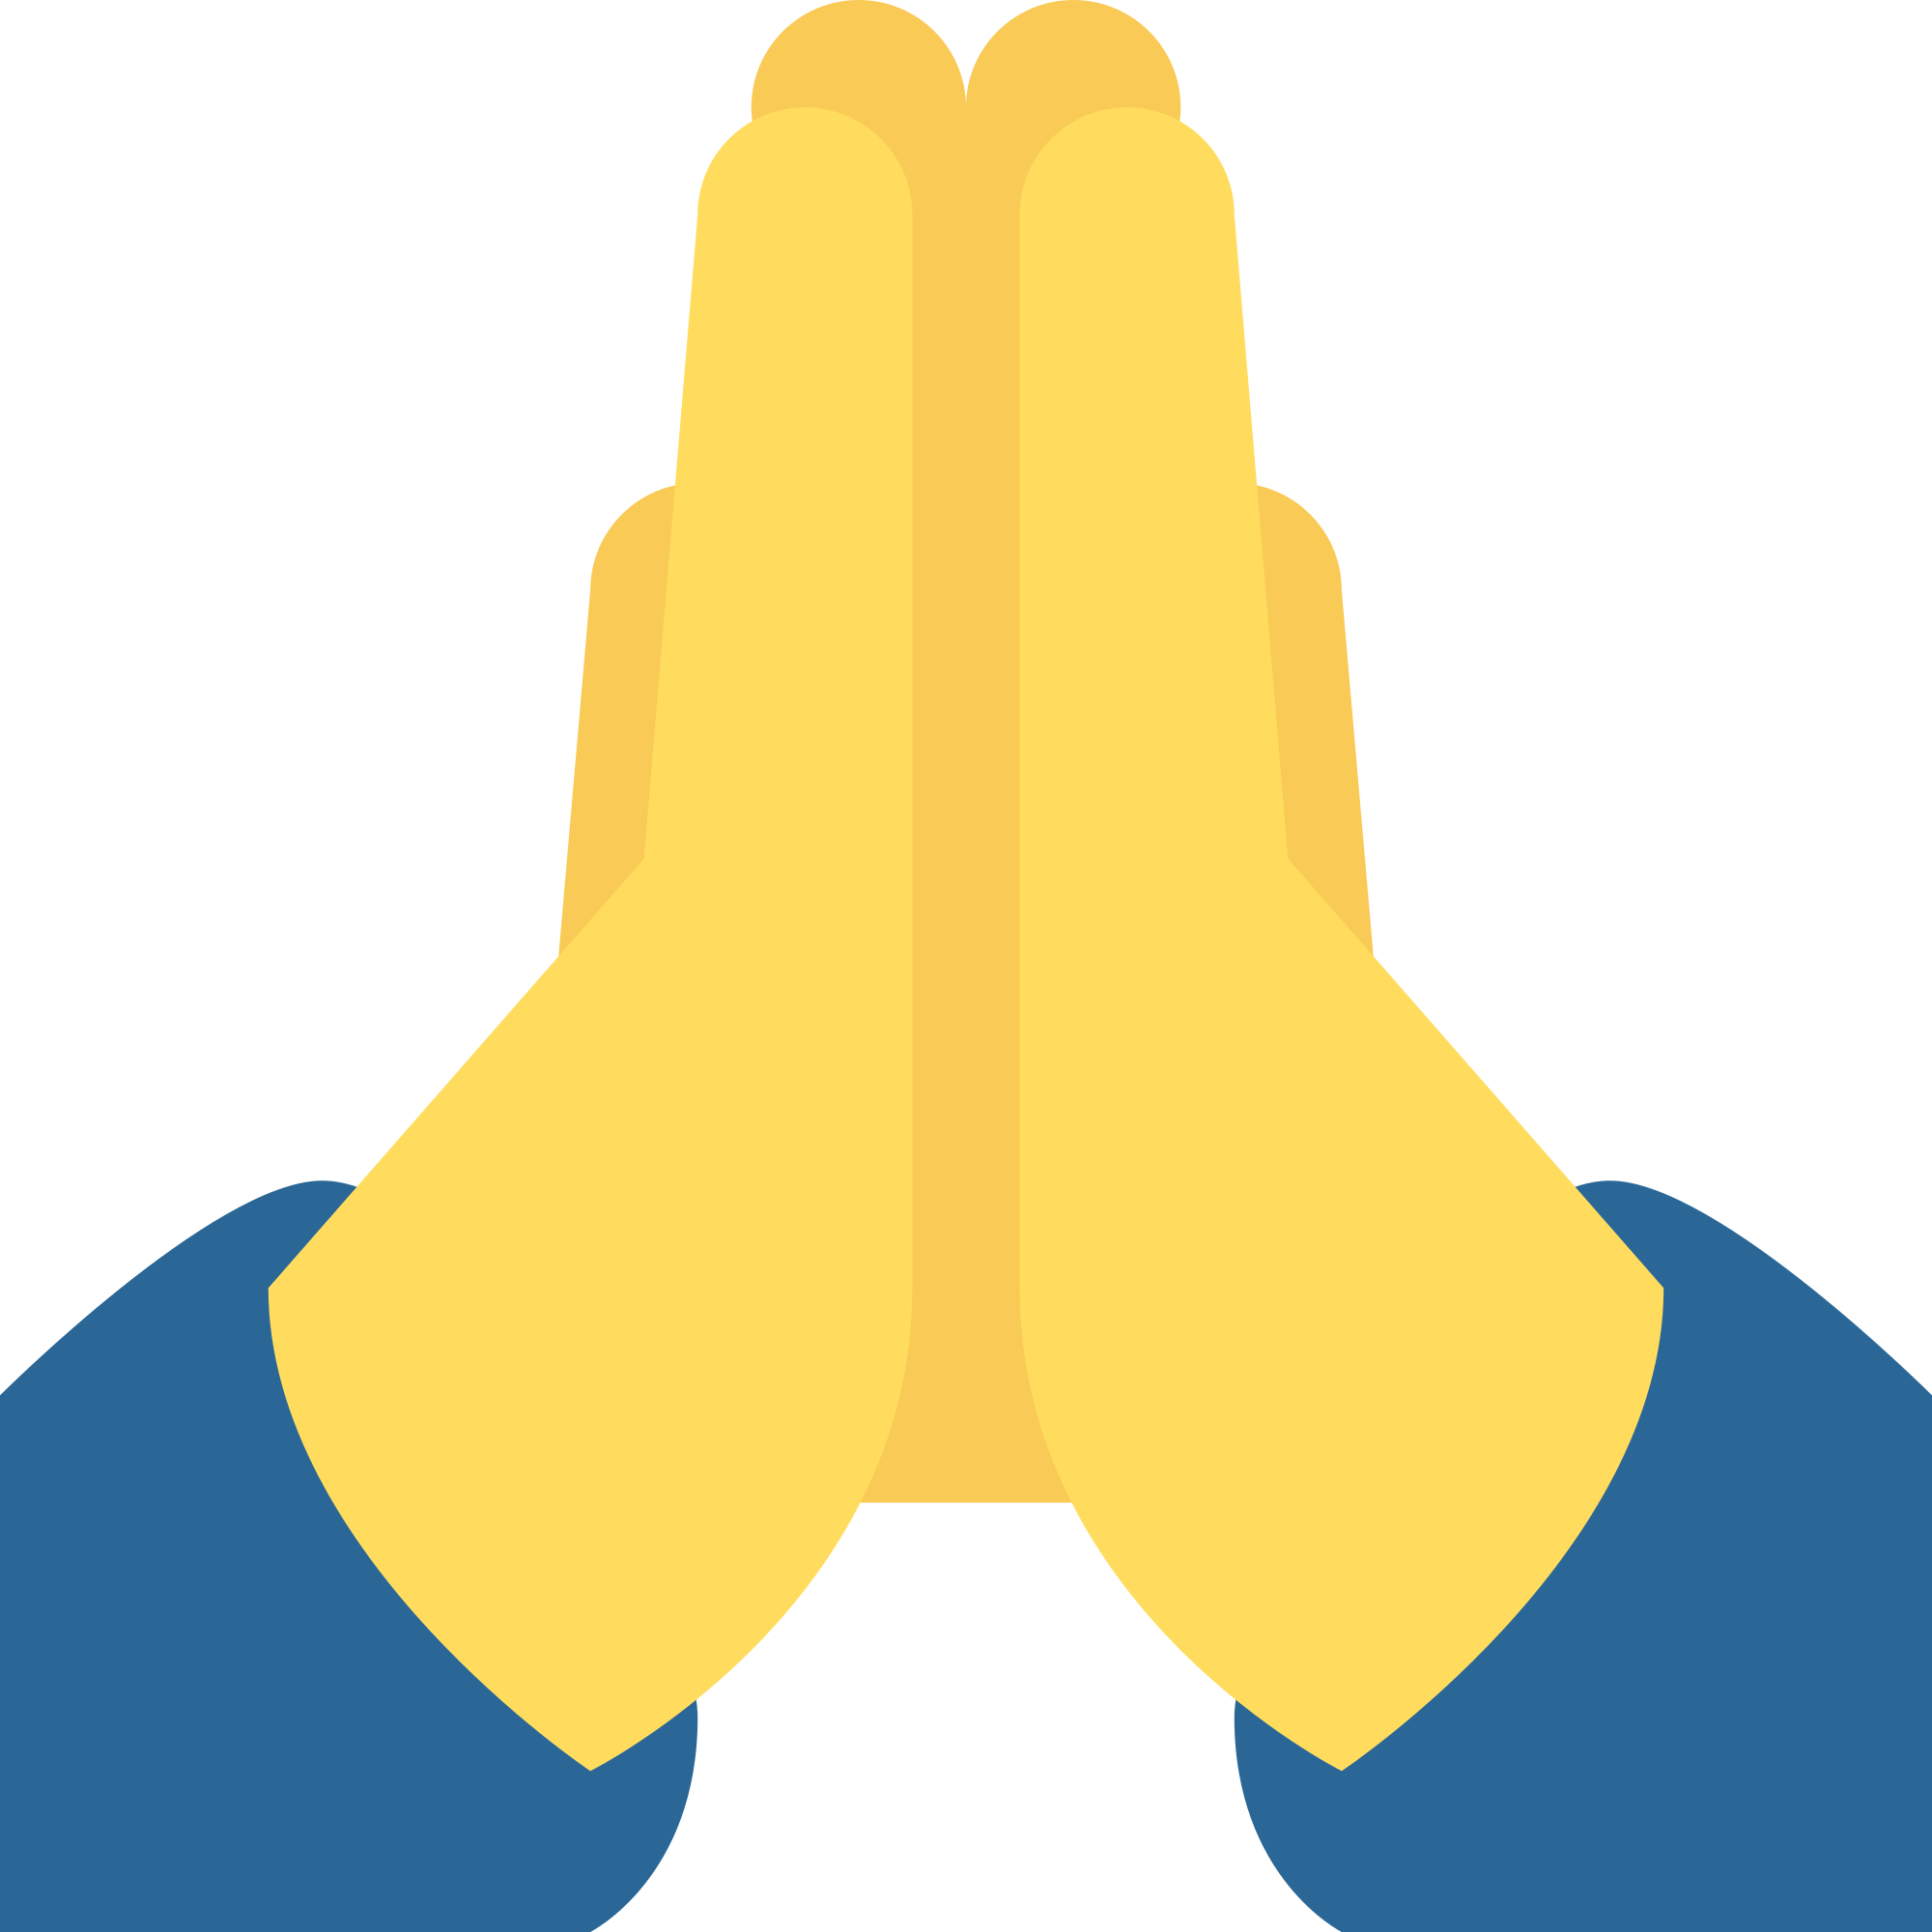 Praying Hands Emoji Prayer High Five Png X Px Praying Hands Images